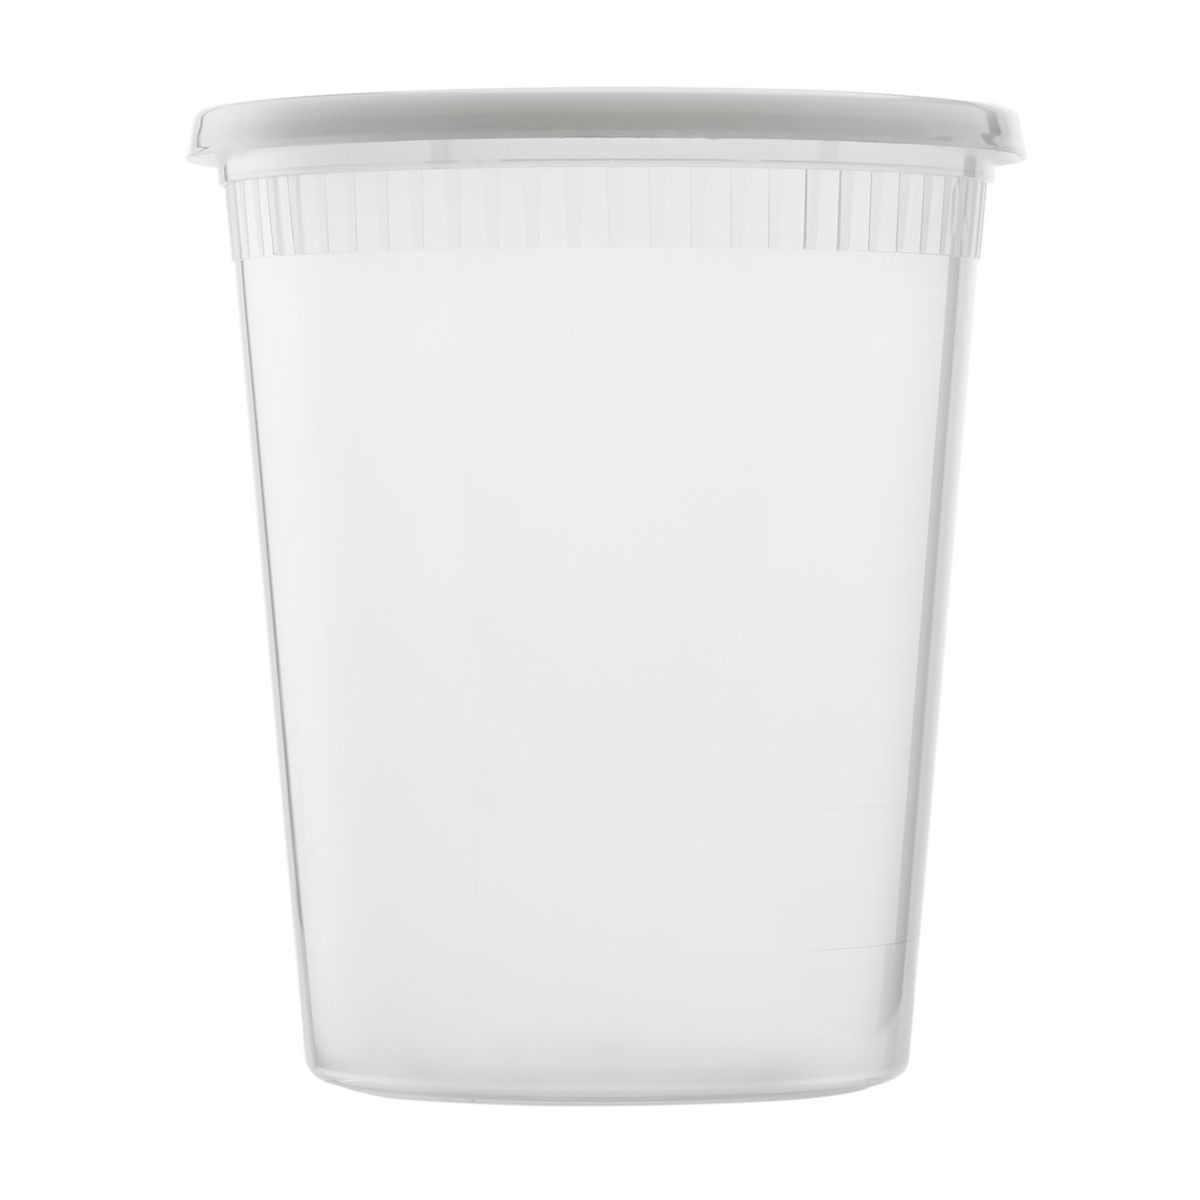 32 oz Soup Containers with Lids Disposable Plastic 240 Set